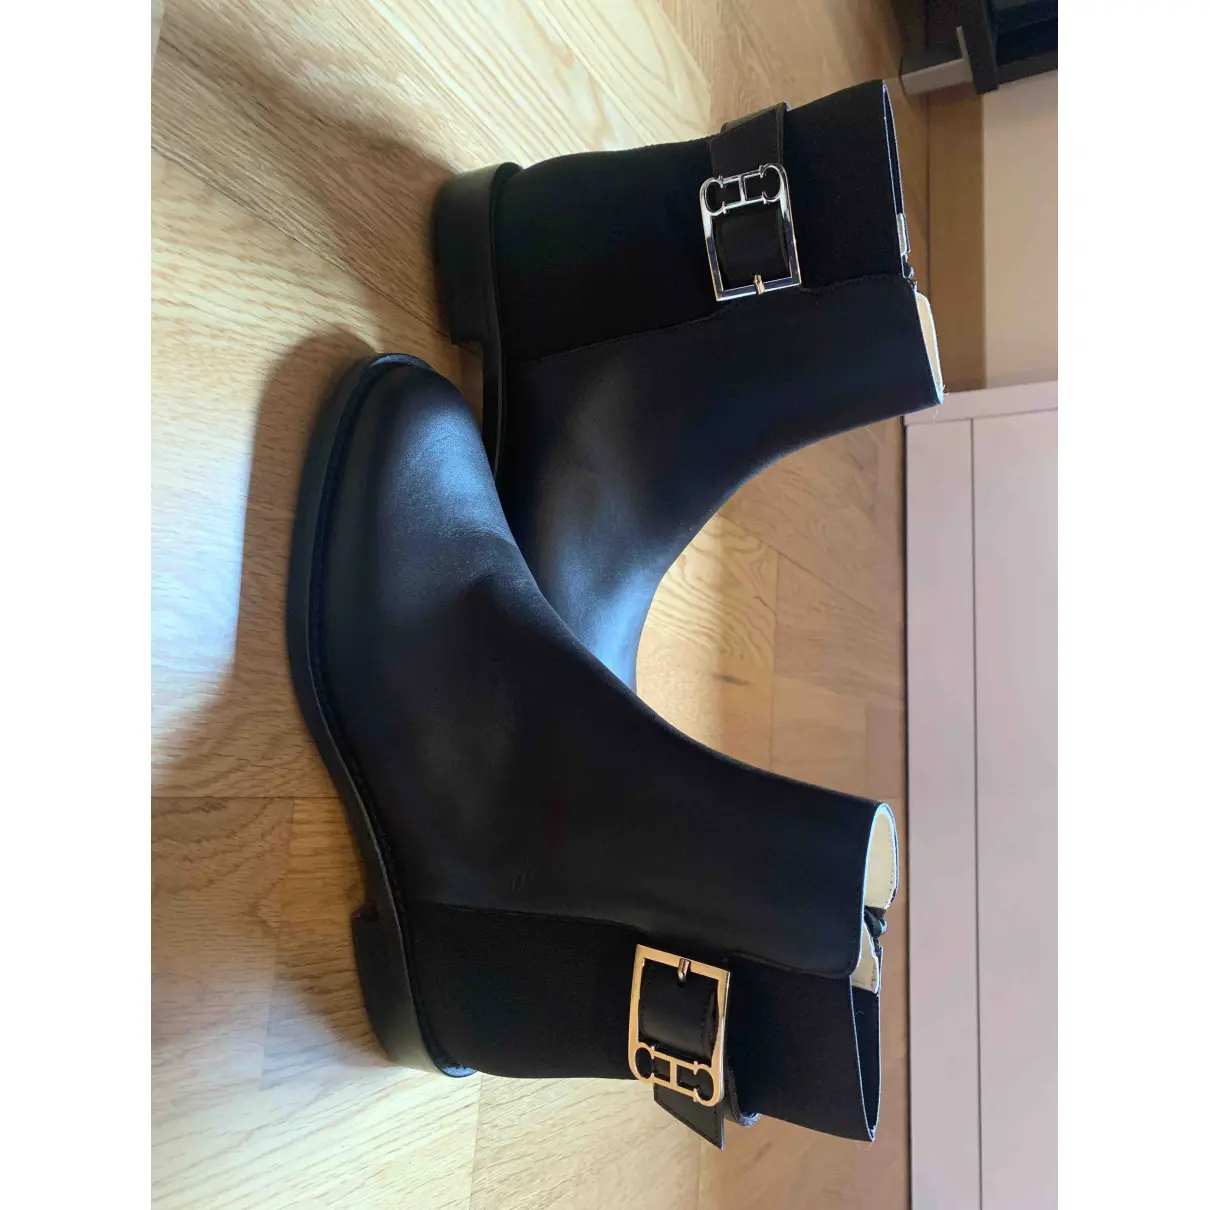 Buy Carolina Herrera Leather ankle boots online